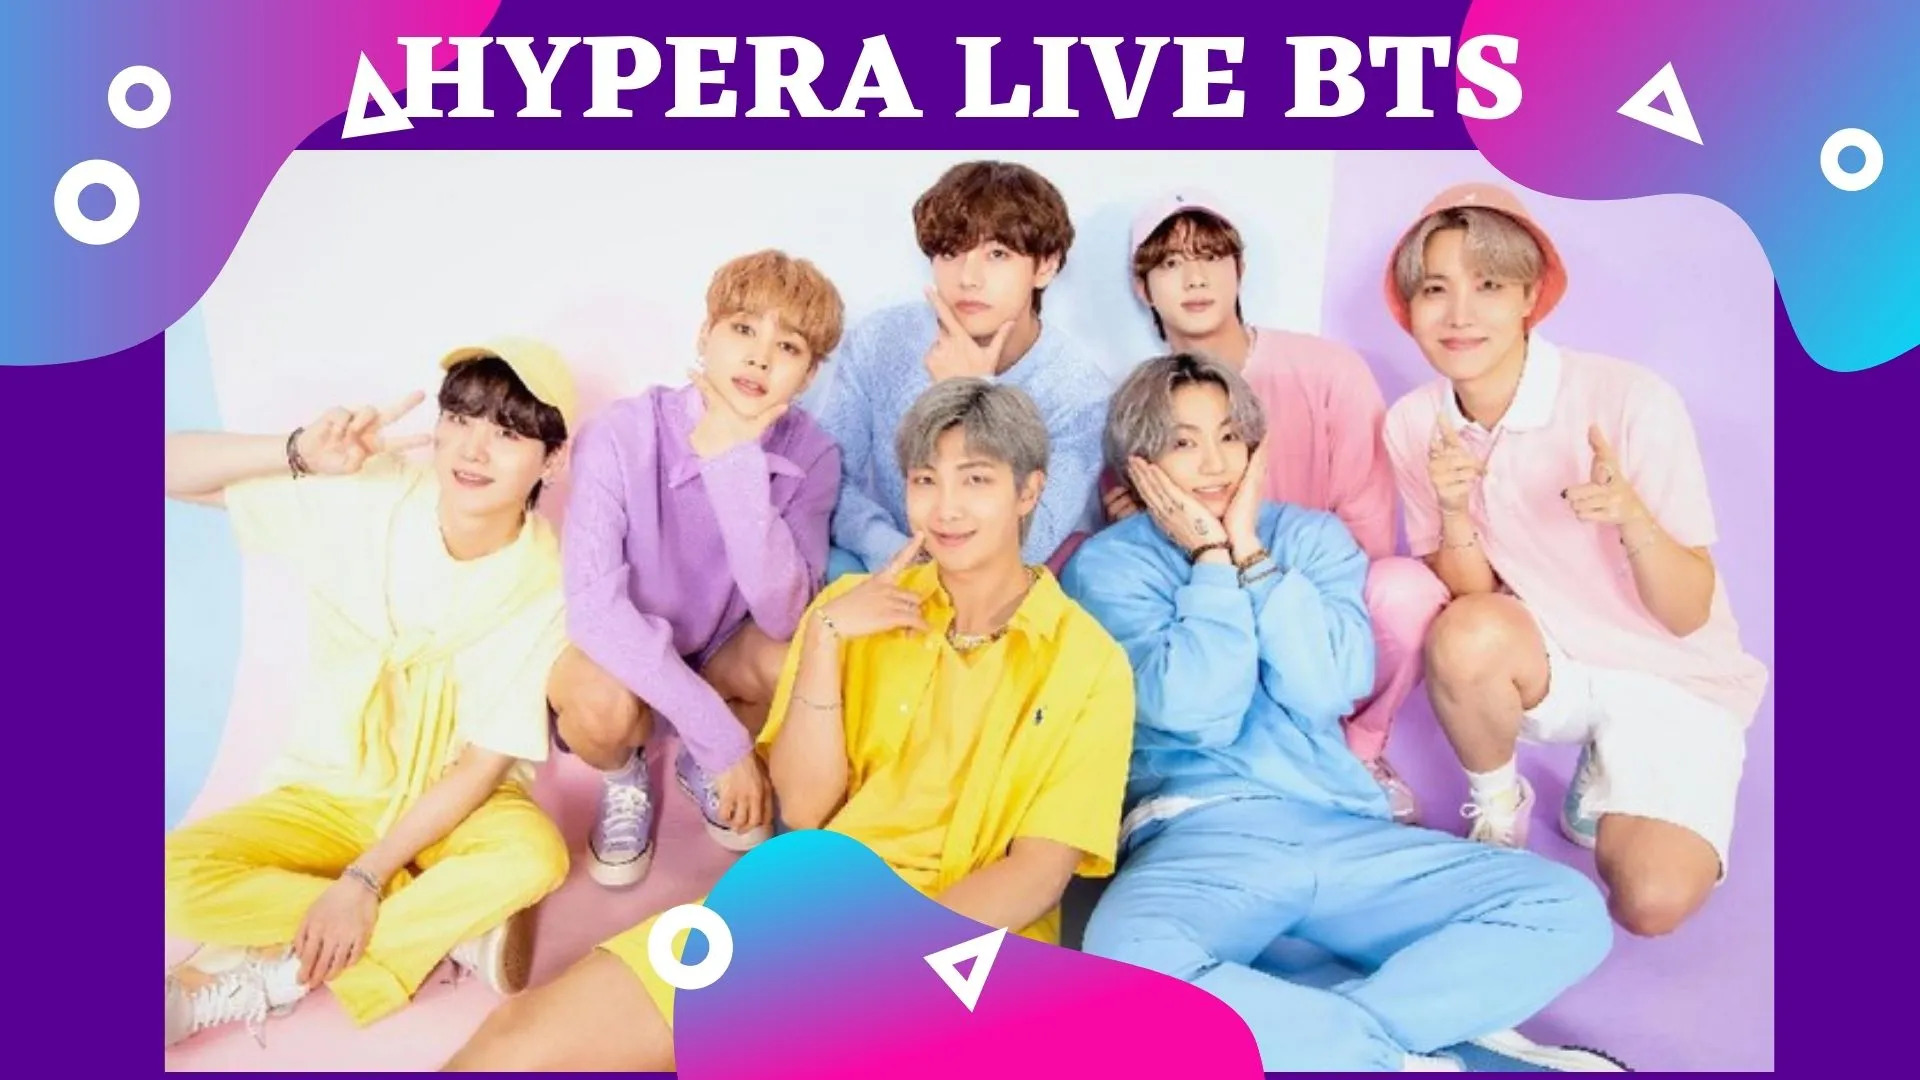 Hypera Live BTS Mnet M Countdown Live Streaming